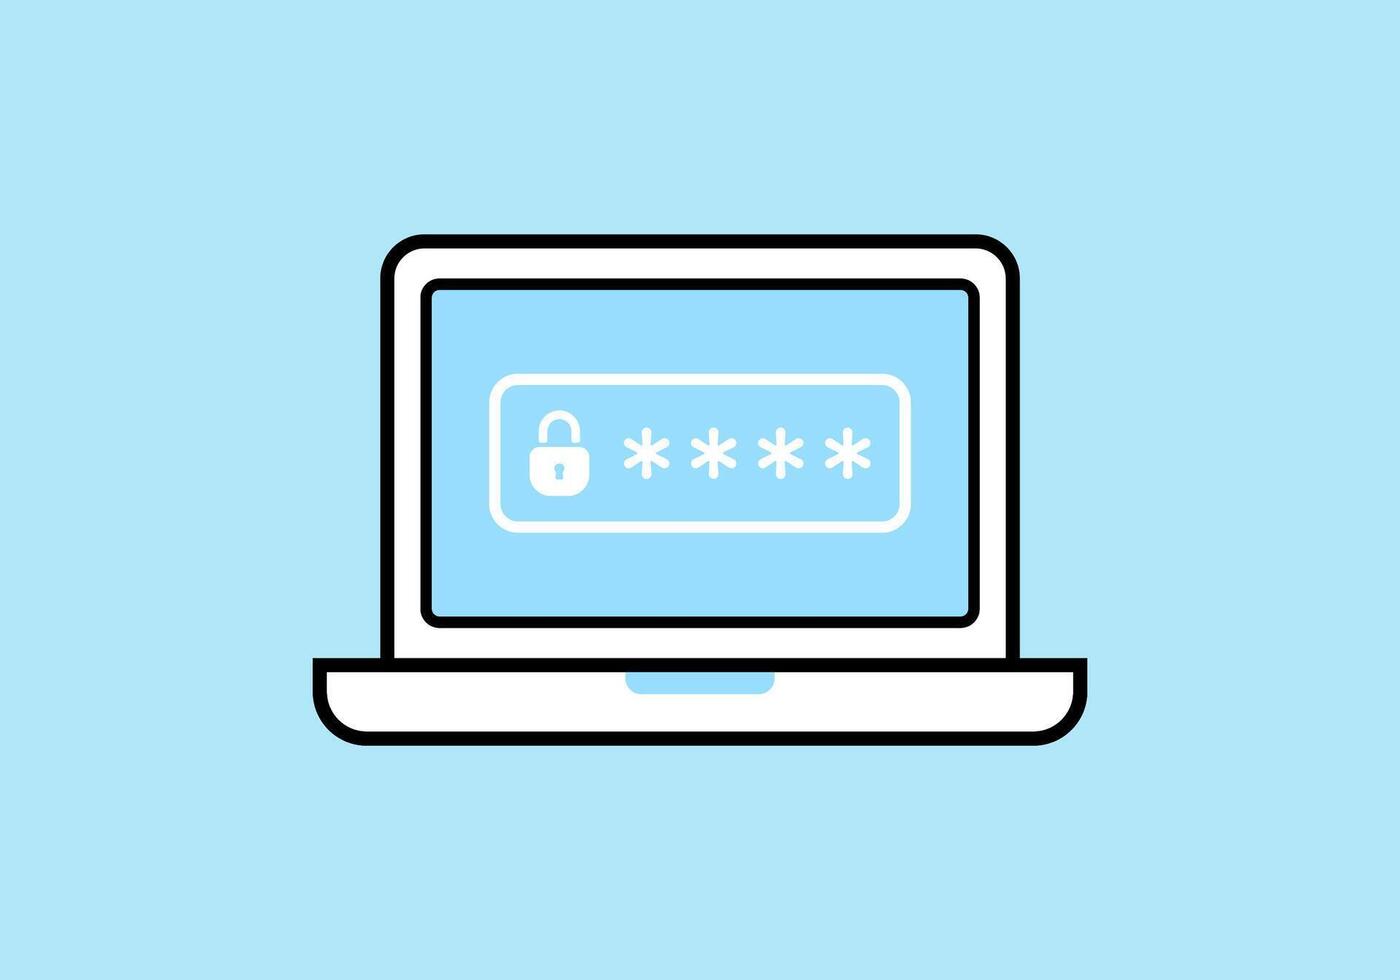 Password Locked Laptop Illustration vector